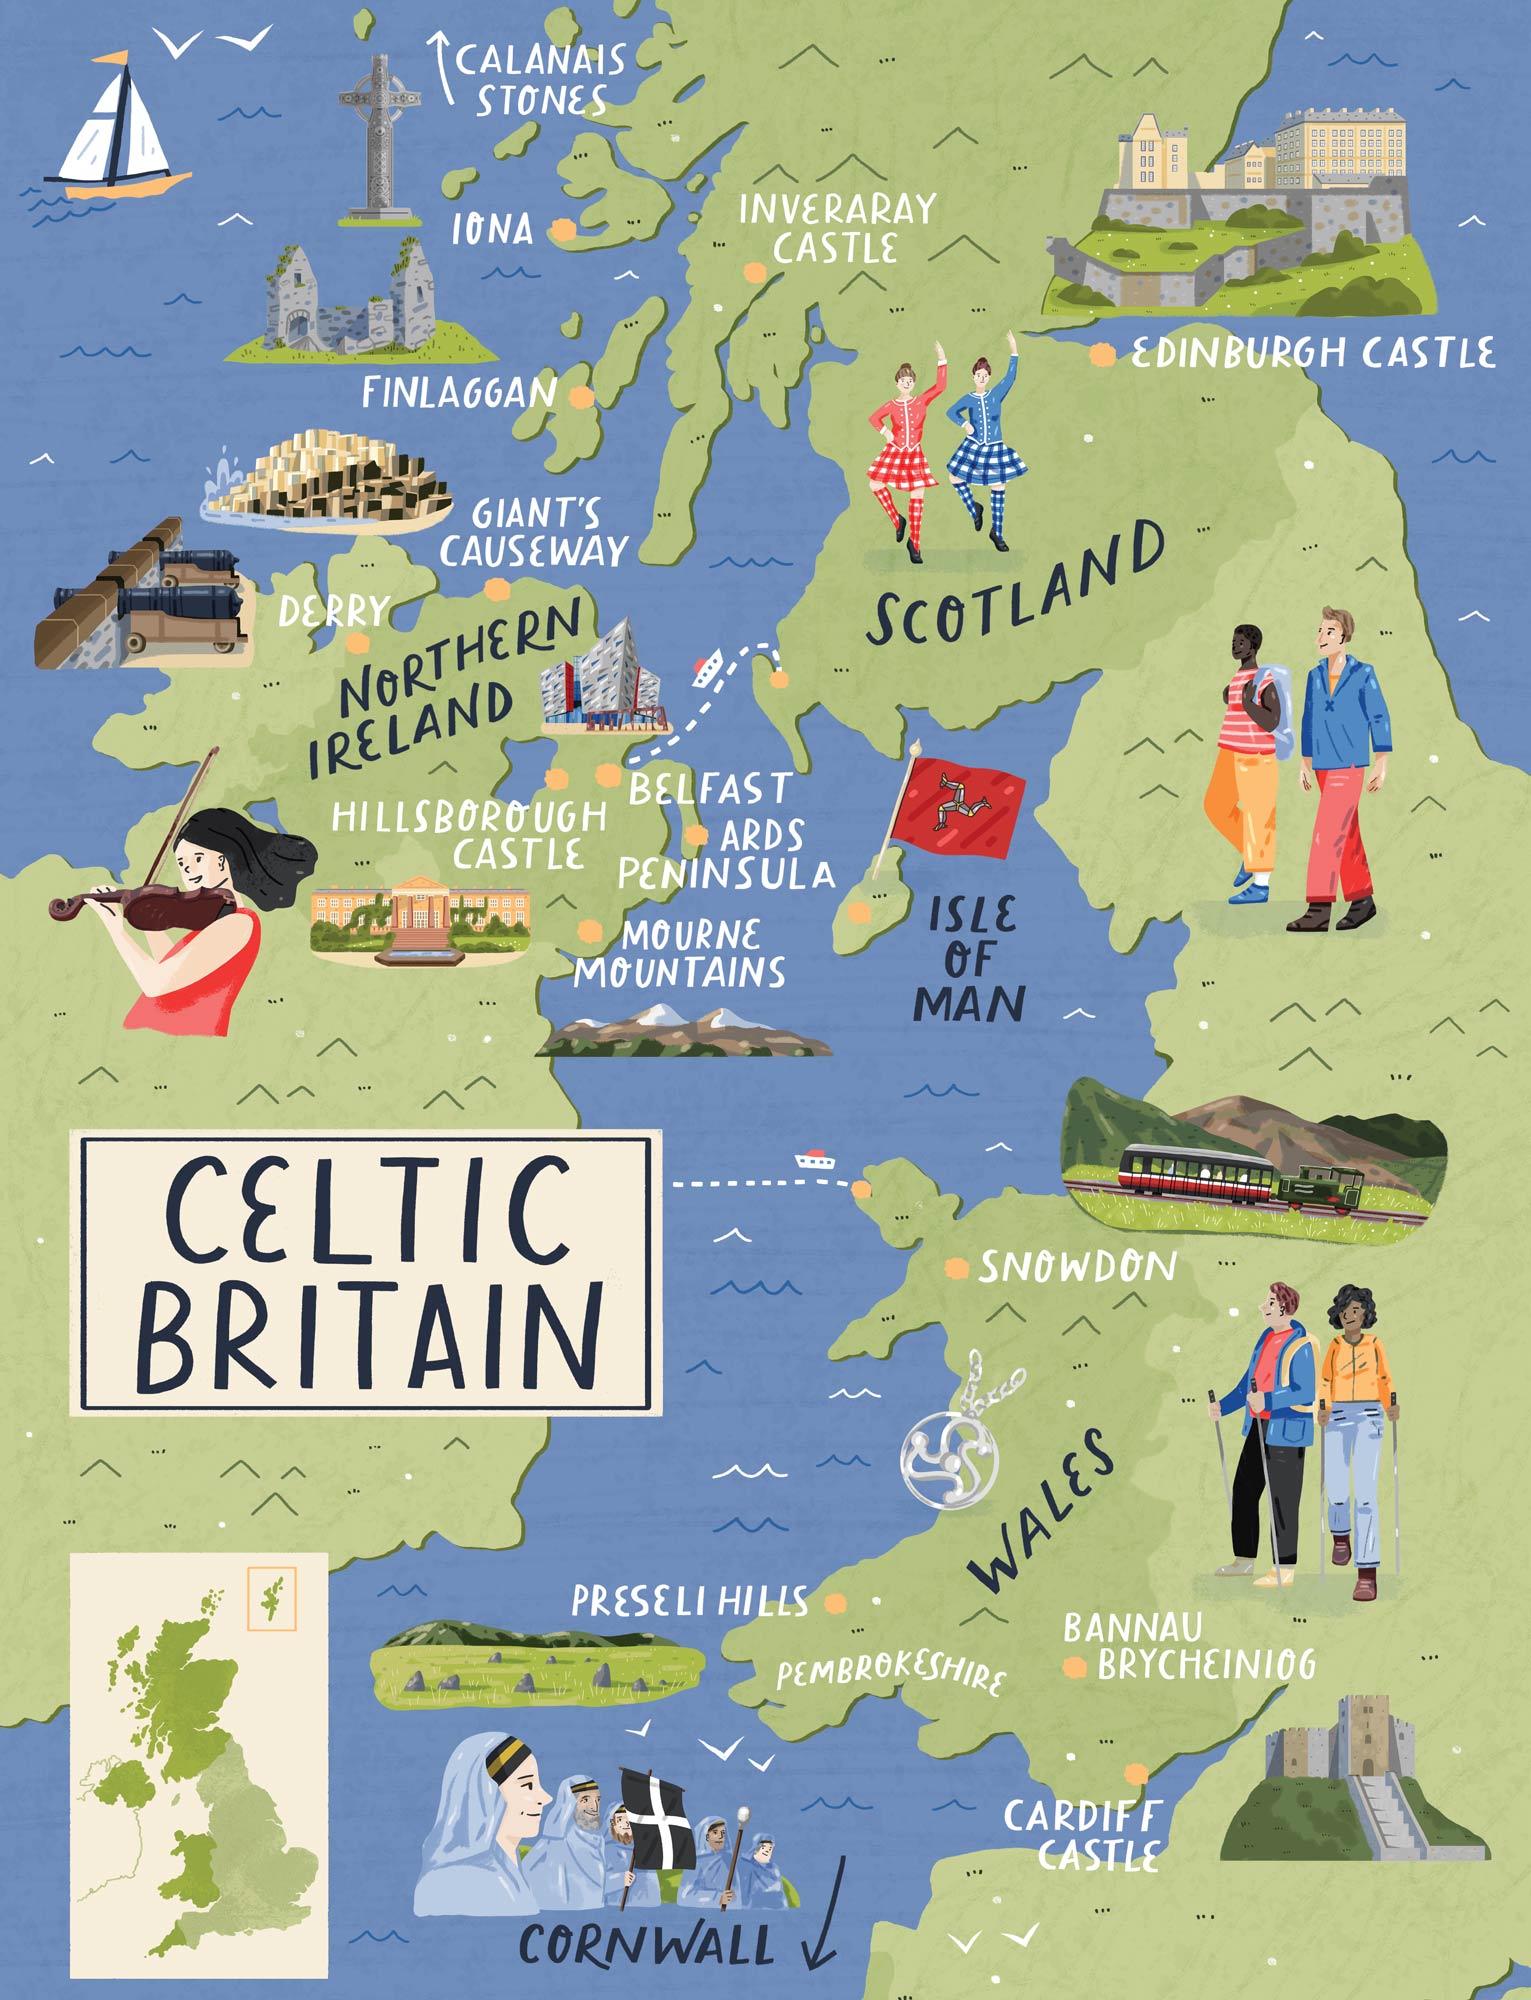 Map of Celtic Britain for Discover Britain Magazine